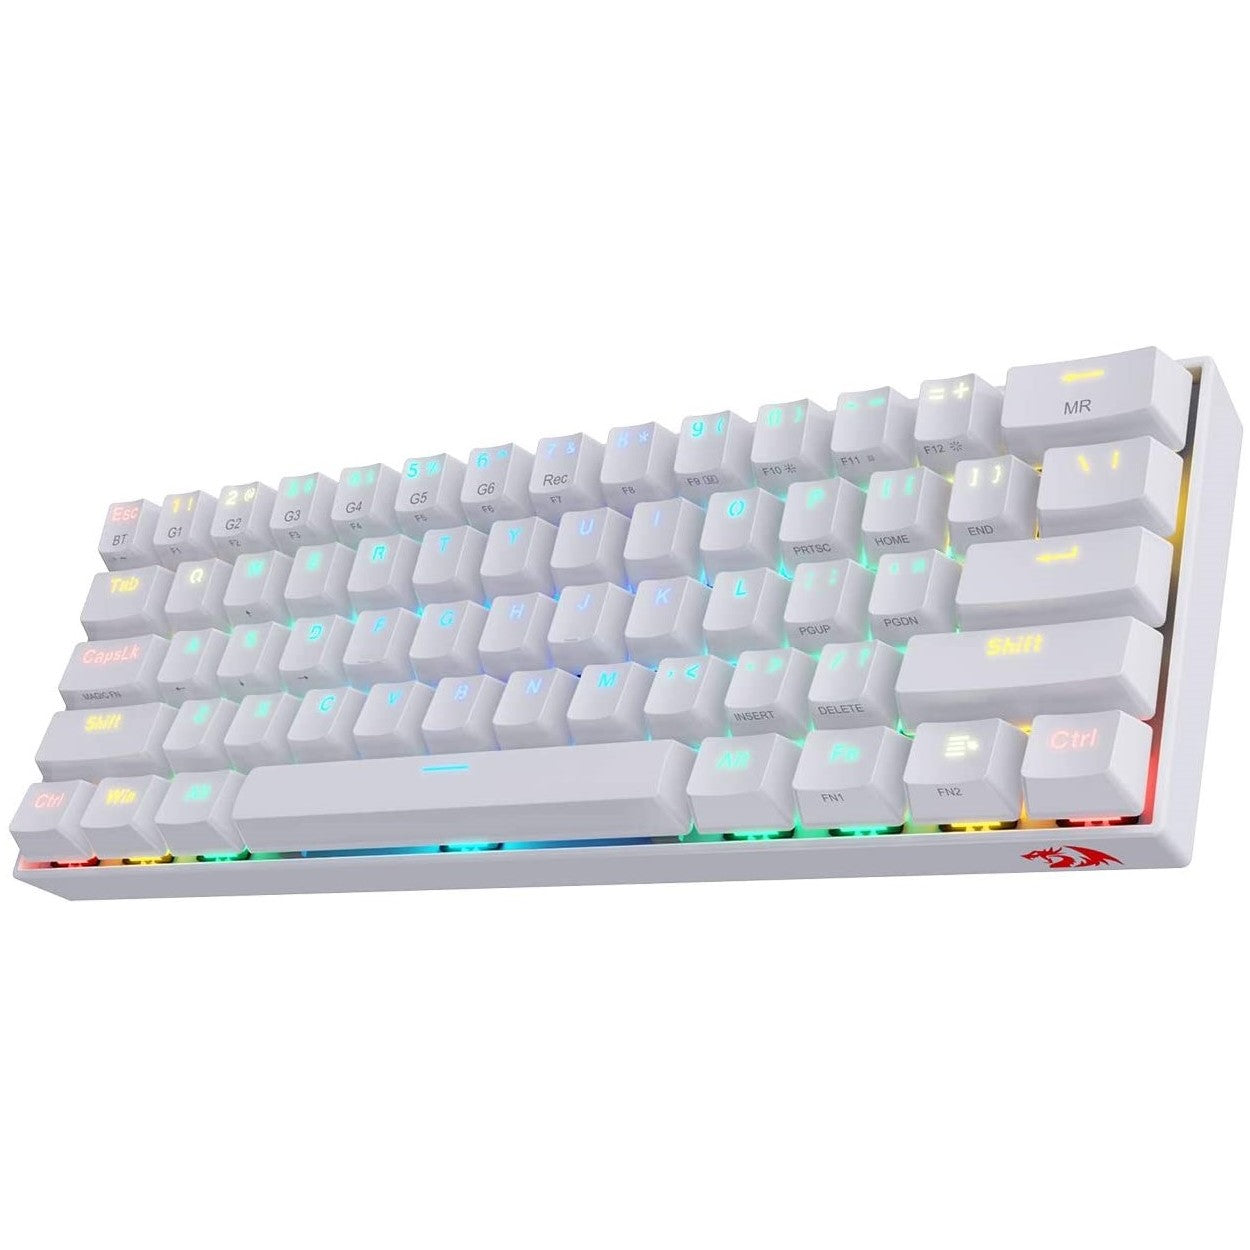 Redragon K530W Pro Draconic Compact RGB Mechanical Gaming Keyboard